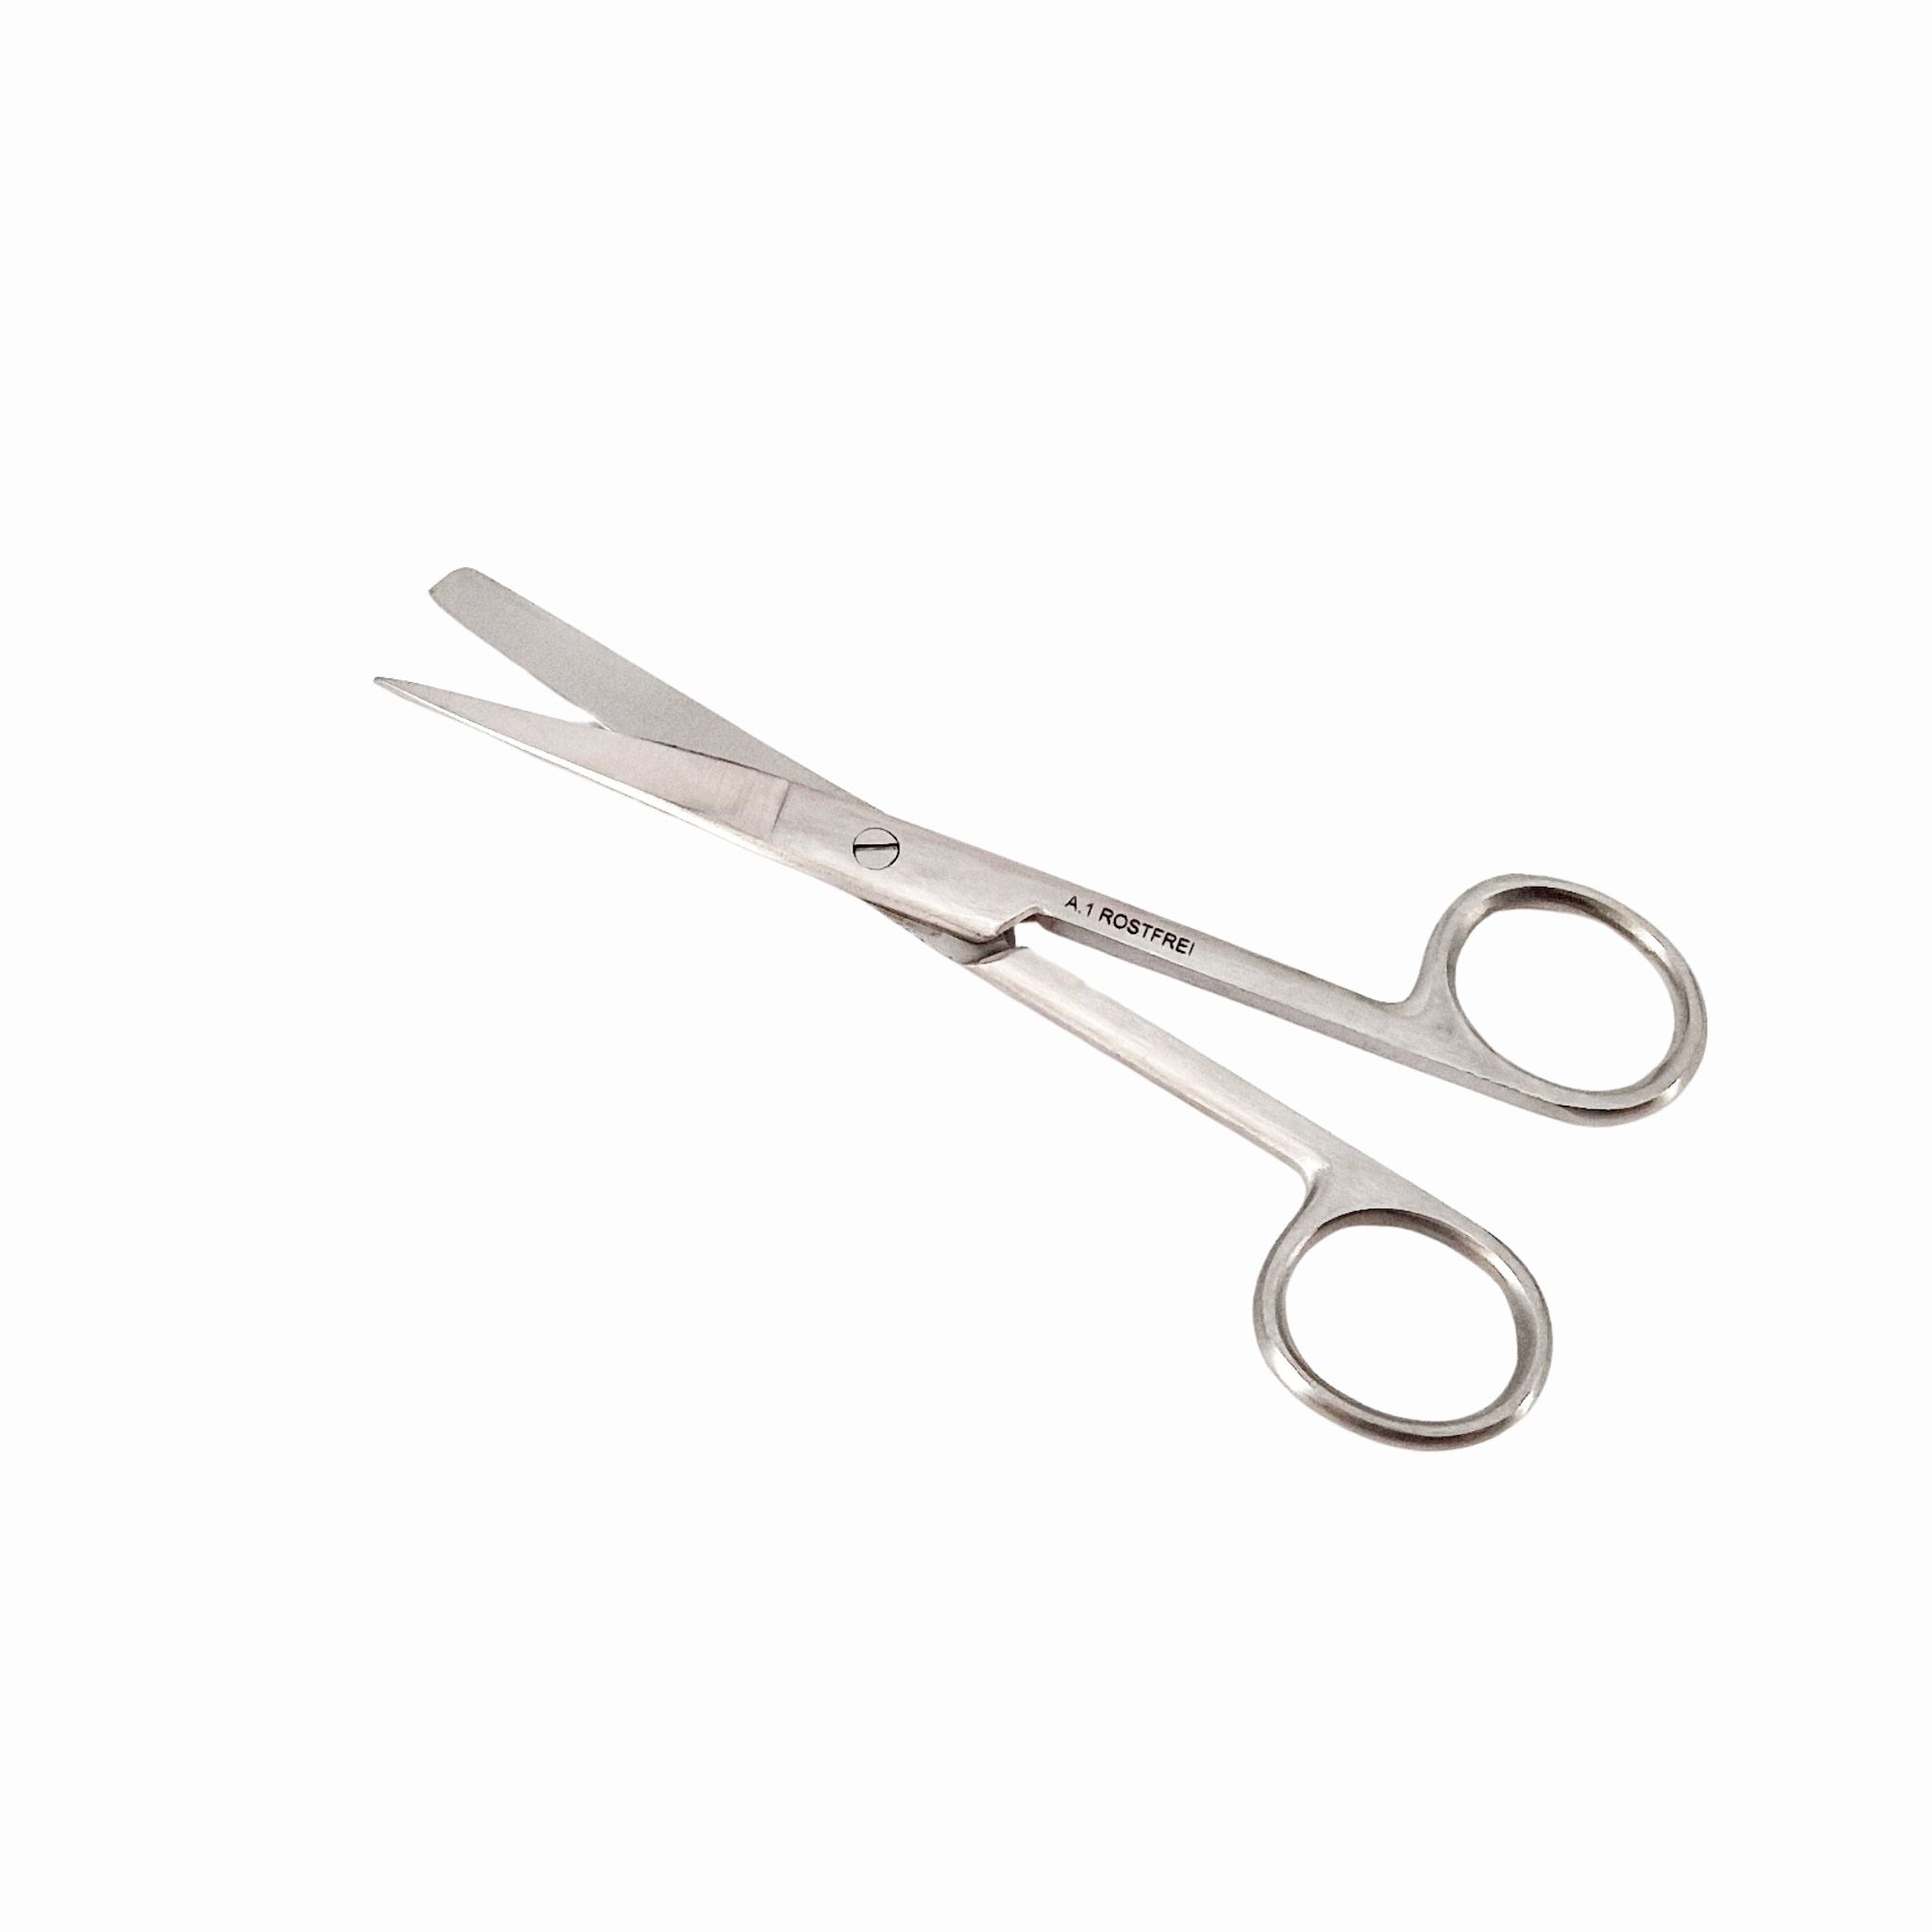 Lavabis scissors straight stainless steel